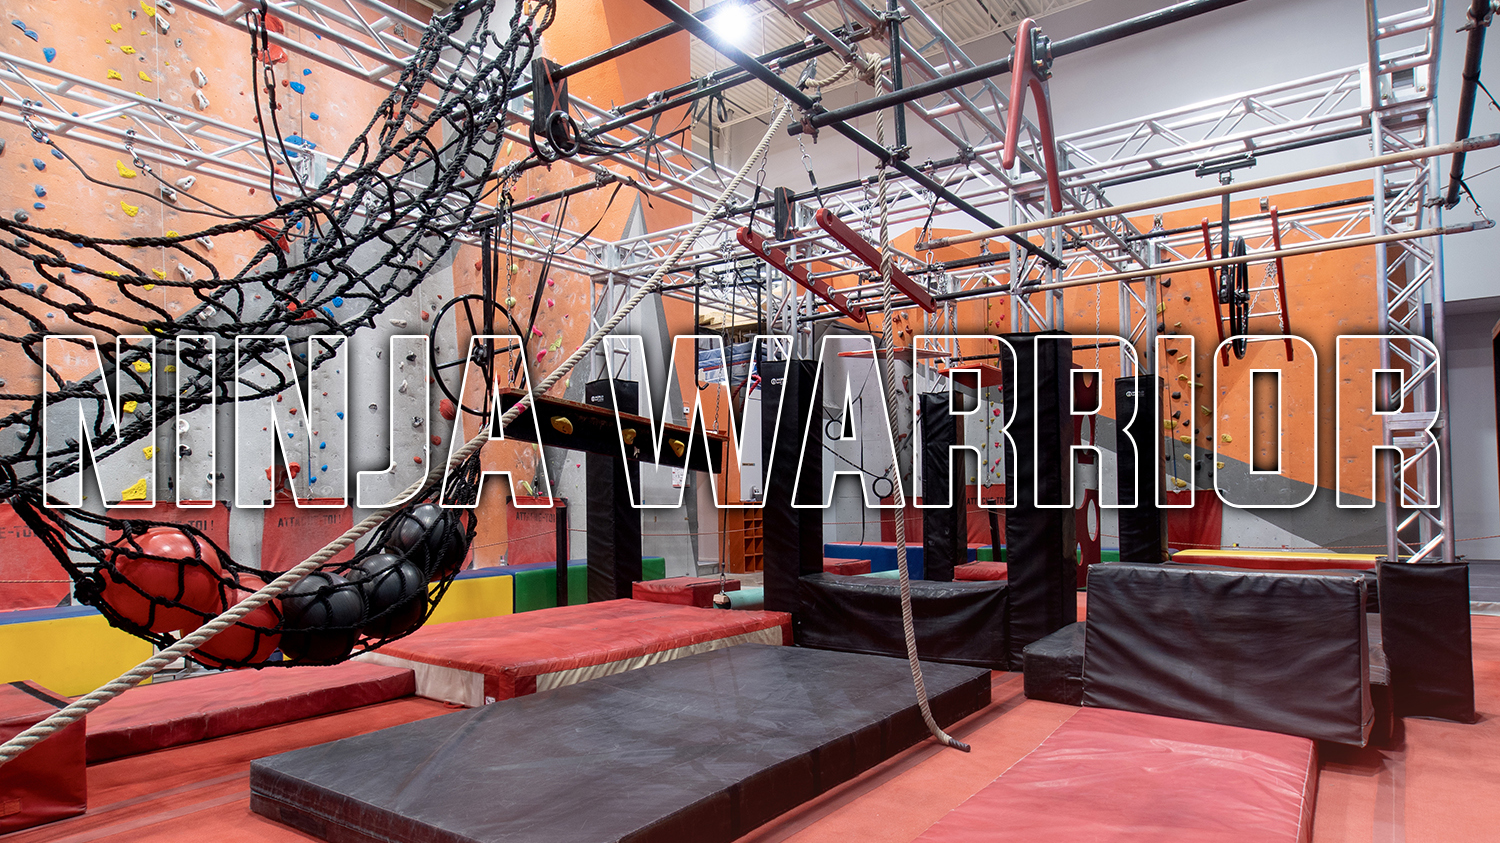 Ninja Warrior libre - Sports & Activités - Laval, Boisbriand